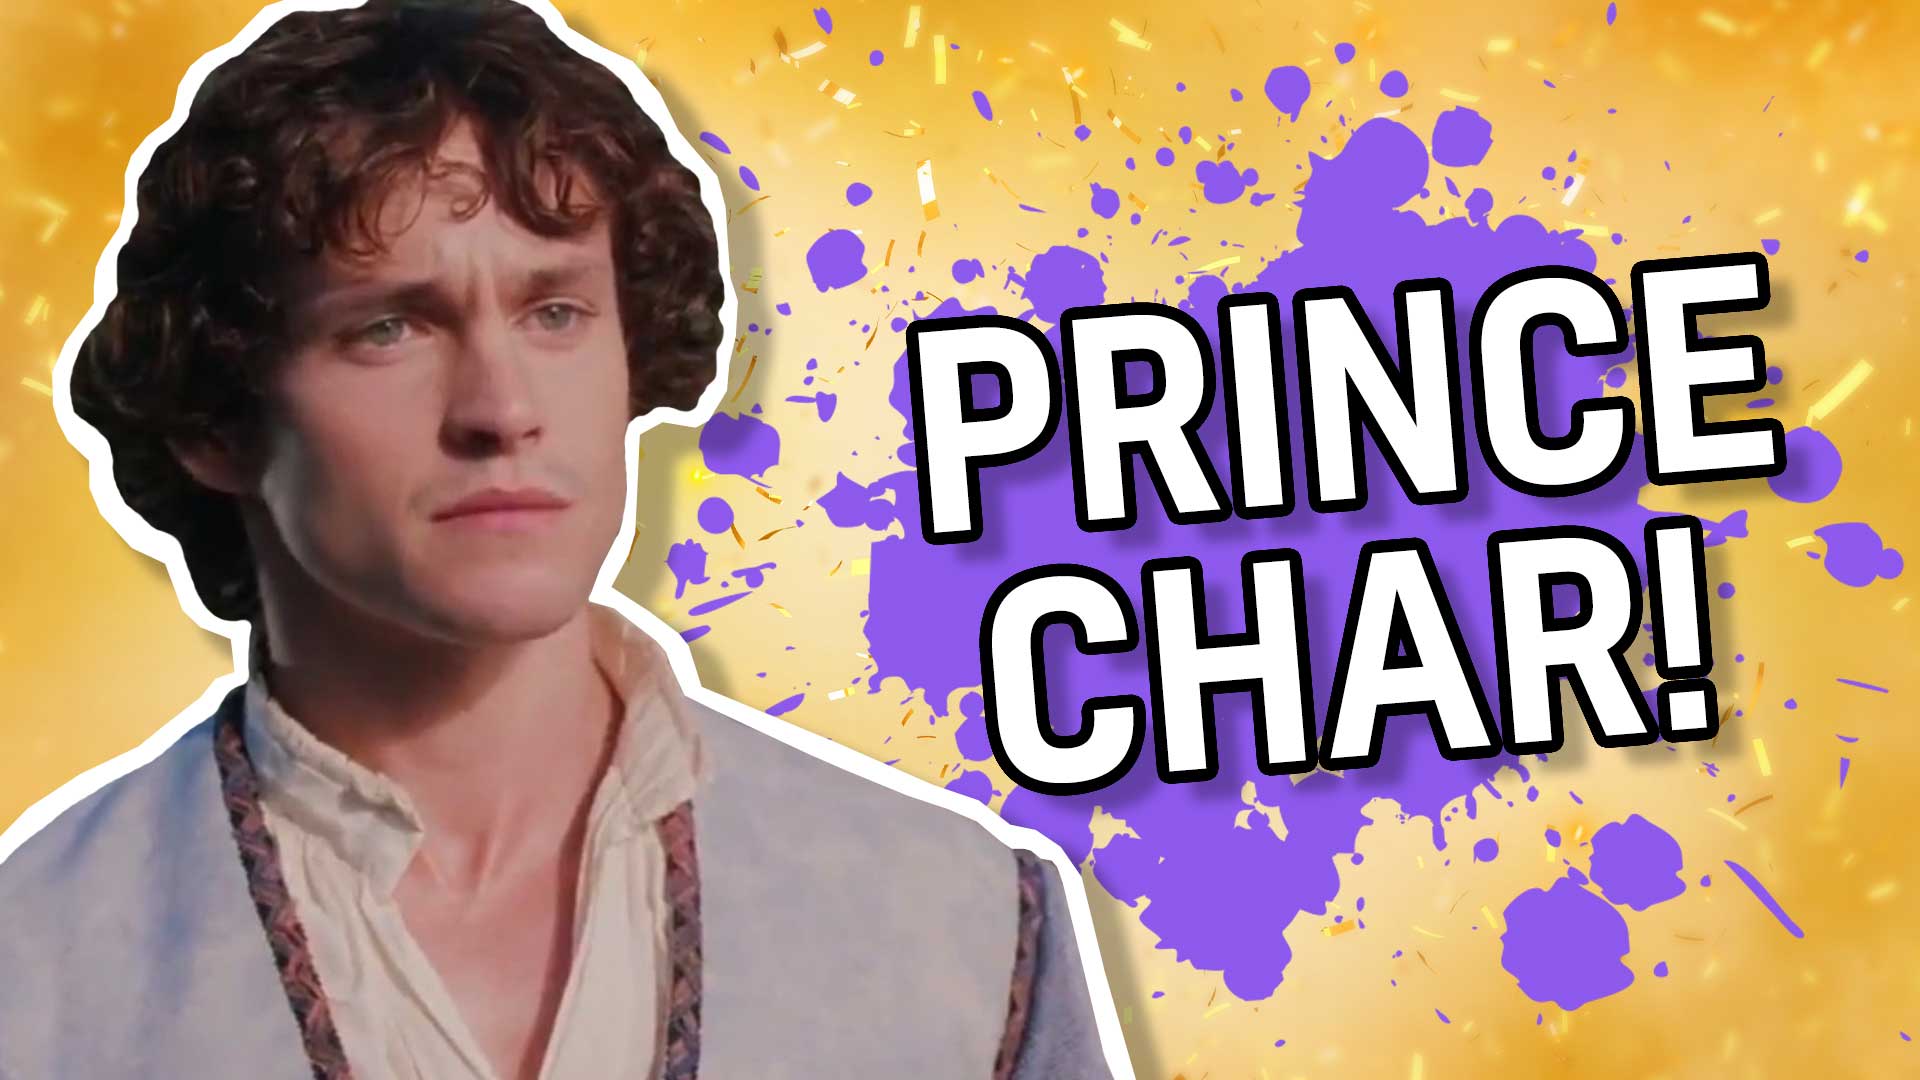 Result: Prince Char